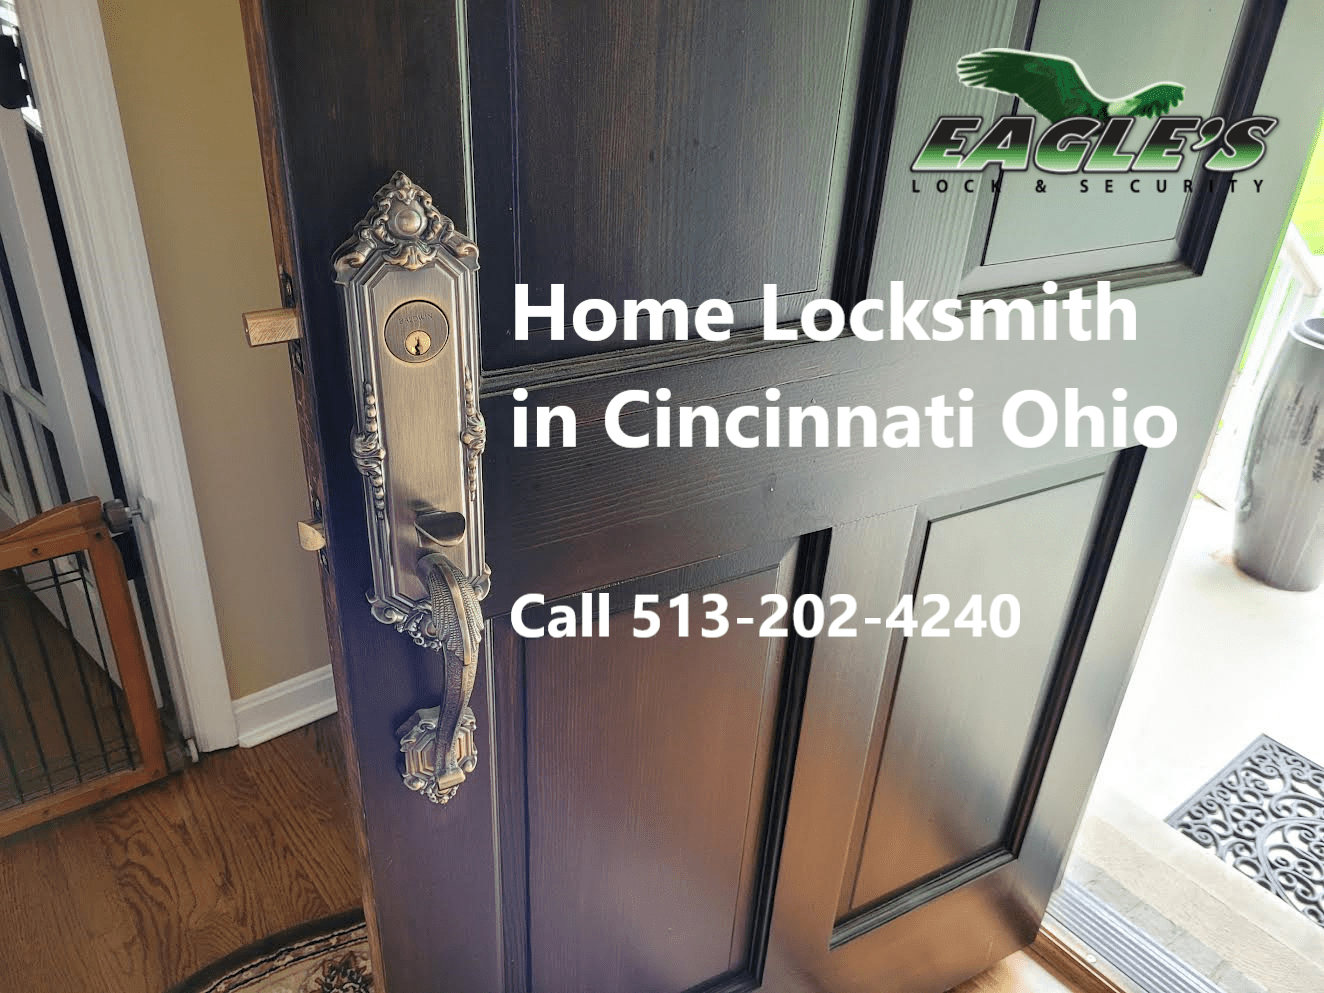 Home Locksmith in Cincinnati Ohio